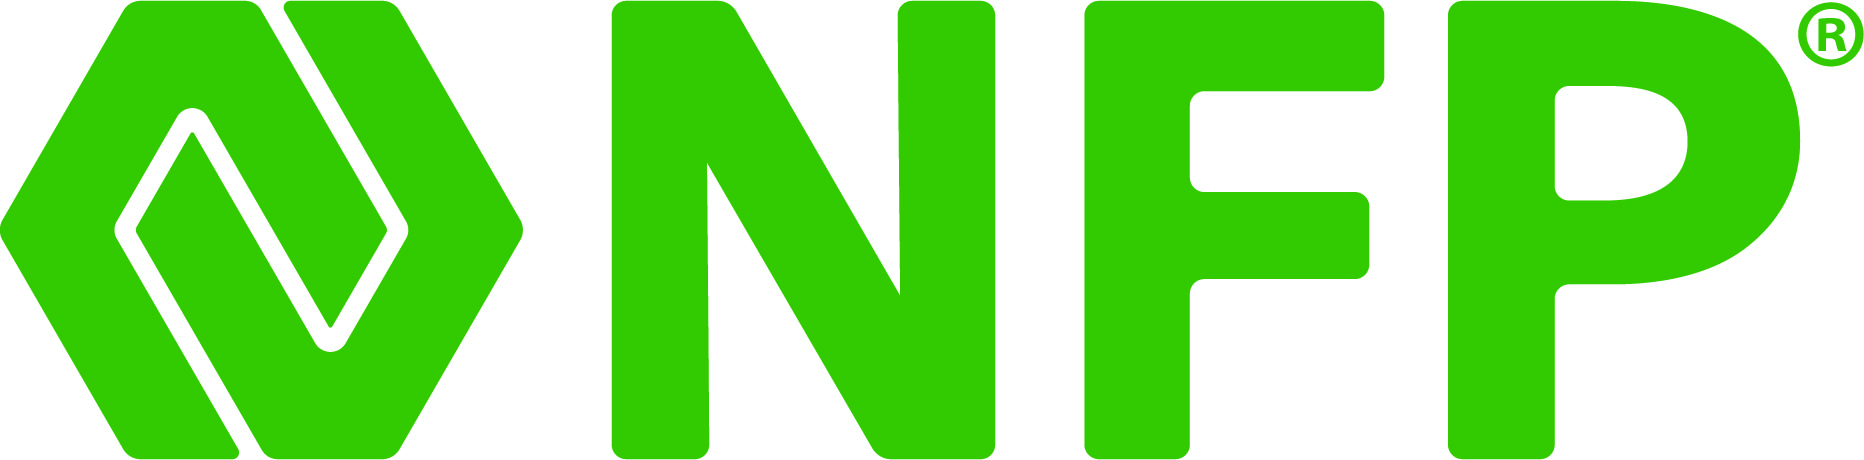 nfp-logo-artwork-cmyk-full-color (002)